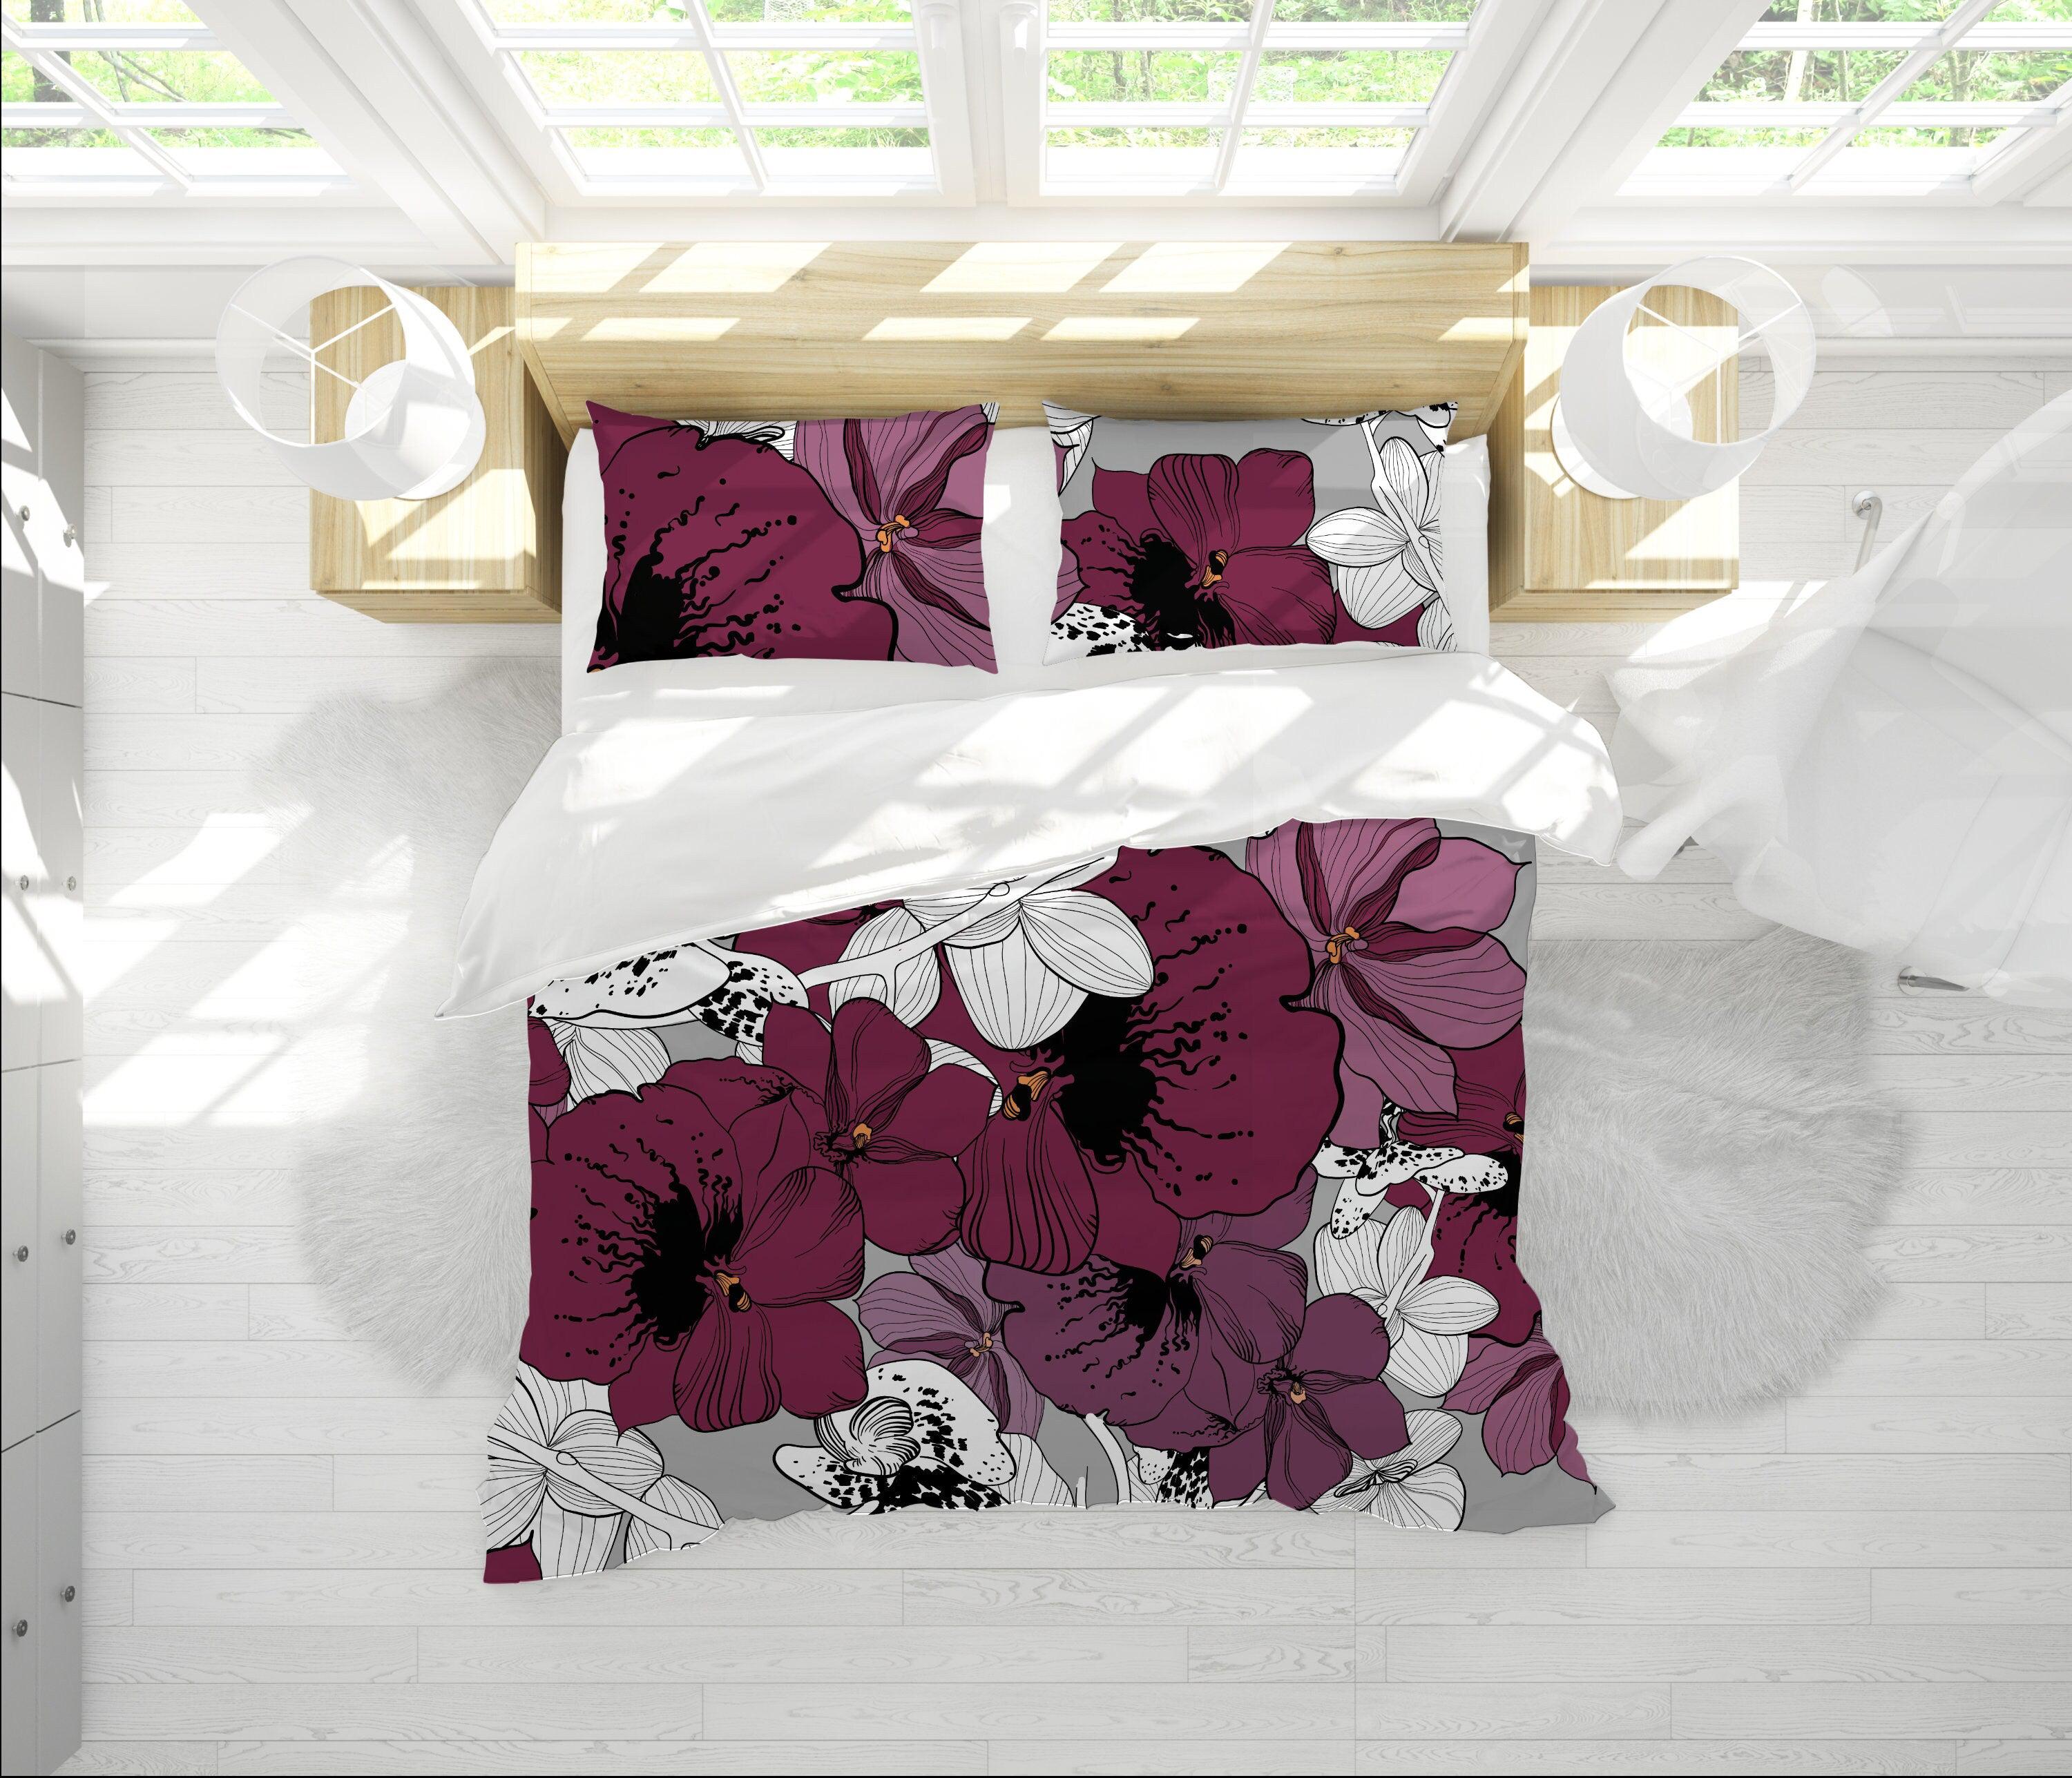 daintyduvet Violet Duvet Cover Full Set Floral Prints | Bedding and Pillow Case | 3 Piece Bedding Set